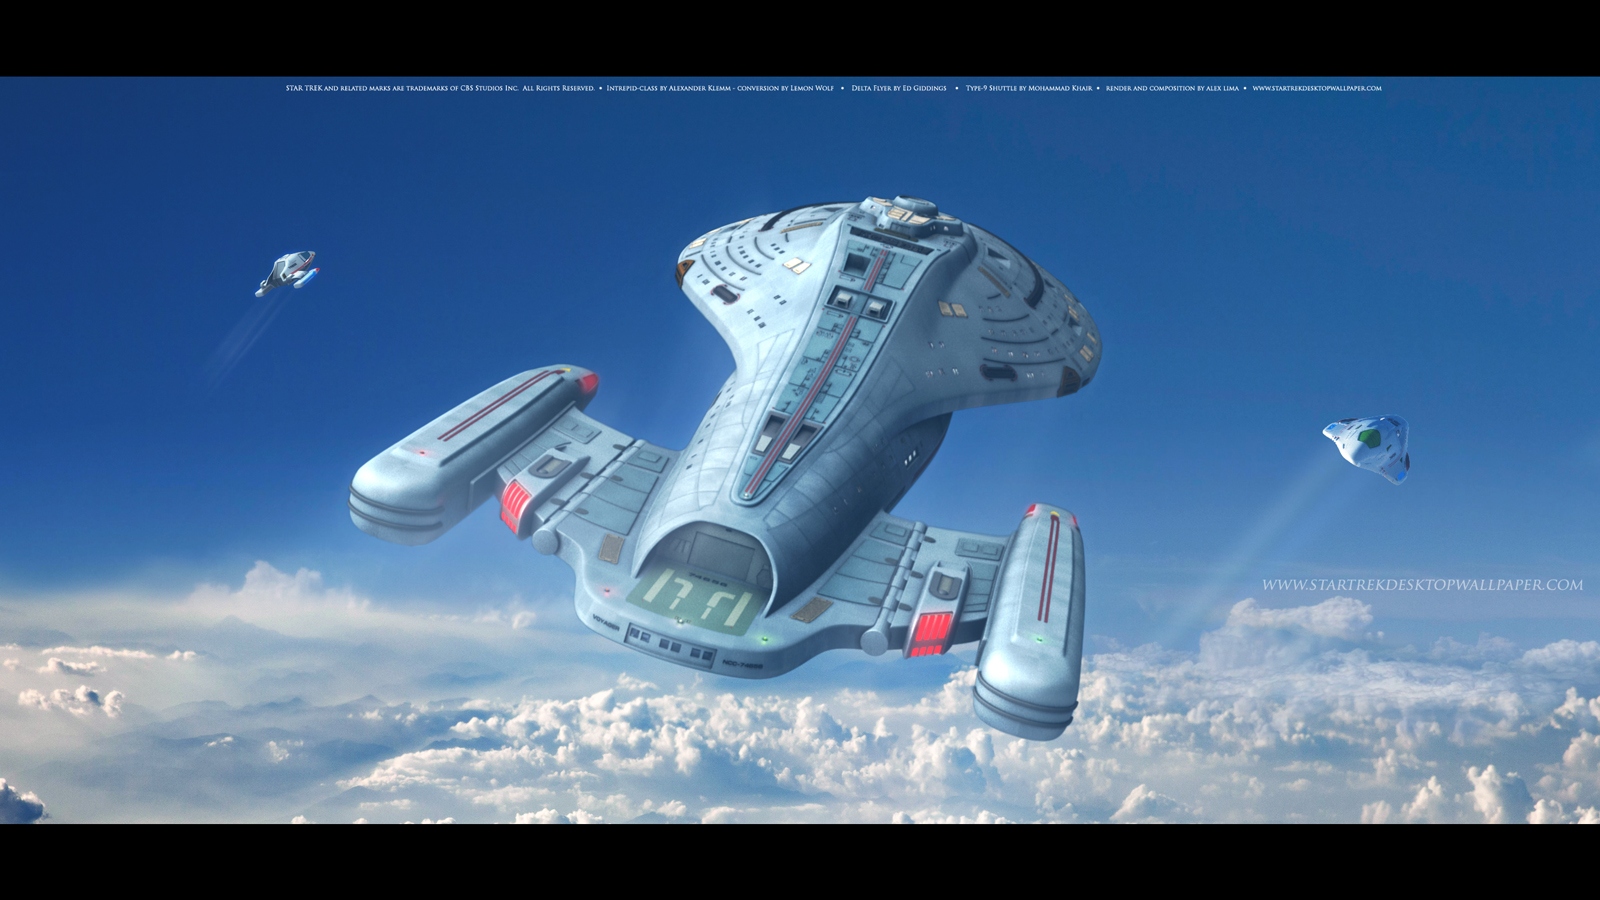 - Star Trek Intrepid Class Starship USS Voyager Above The Clouds - free Star Trek computer desktop wallpaper, pictures, images.